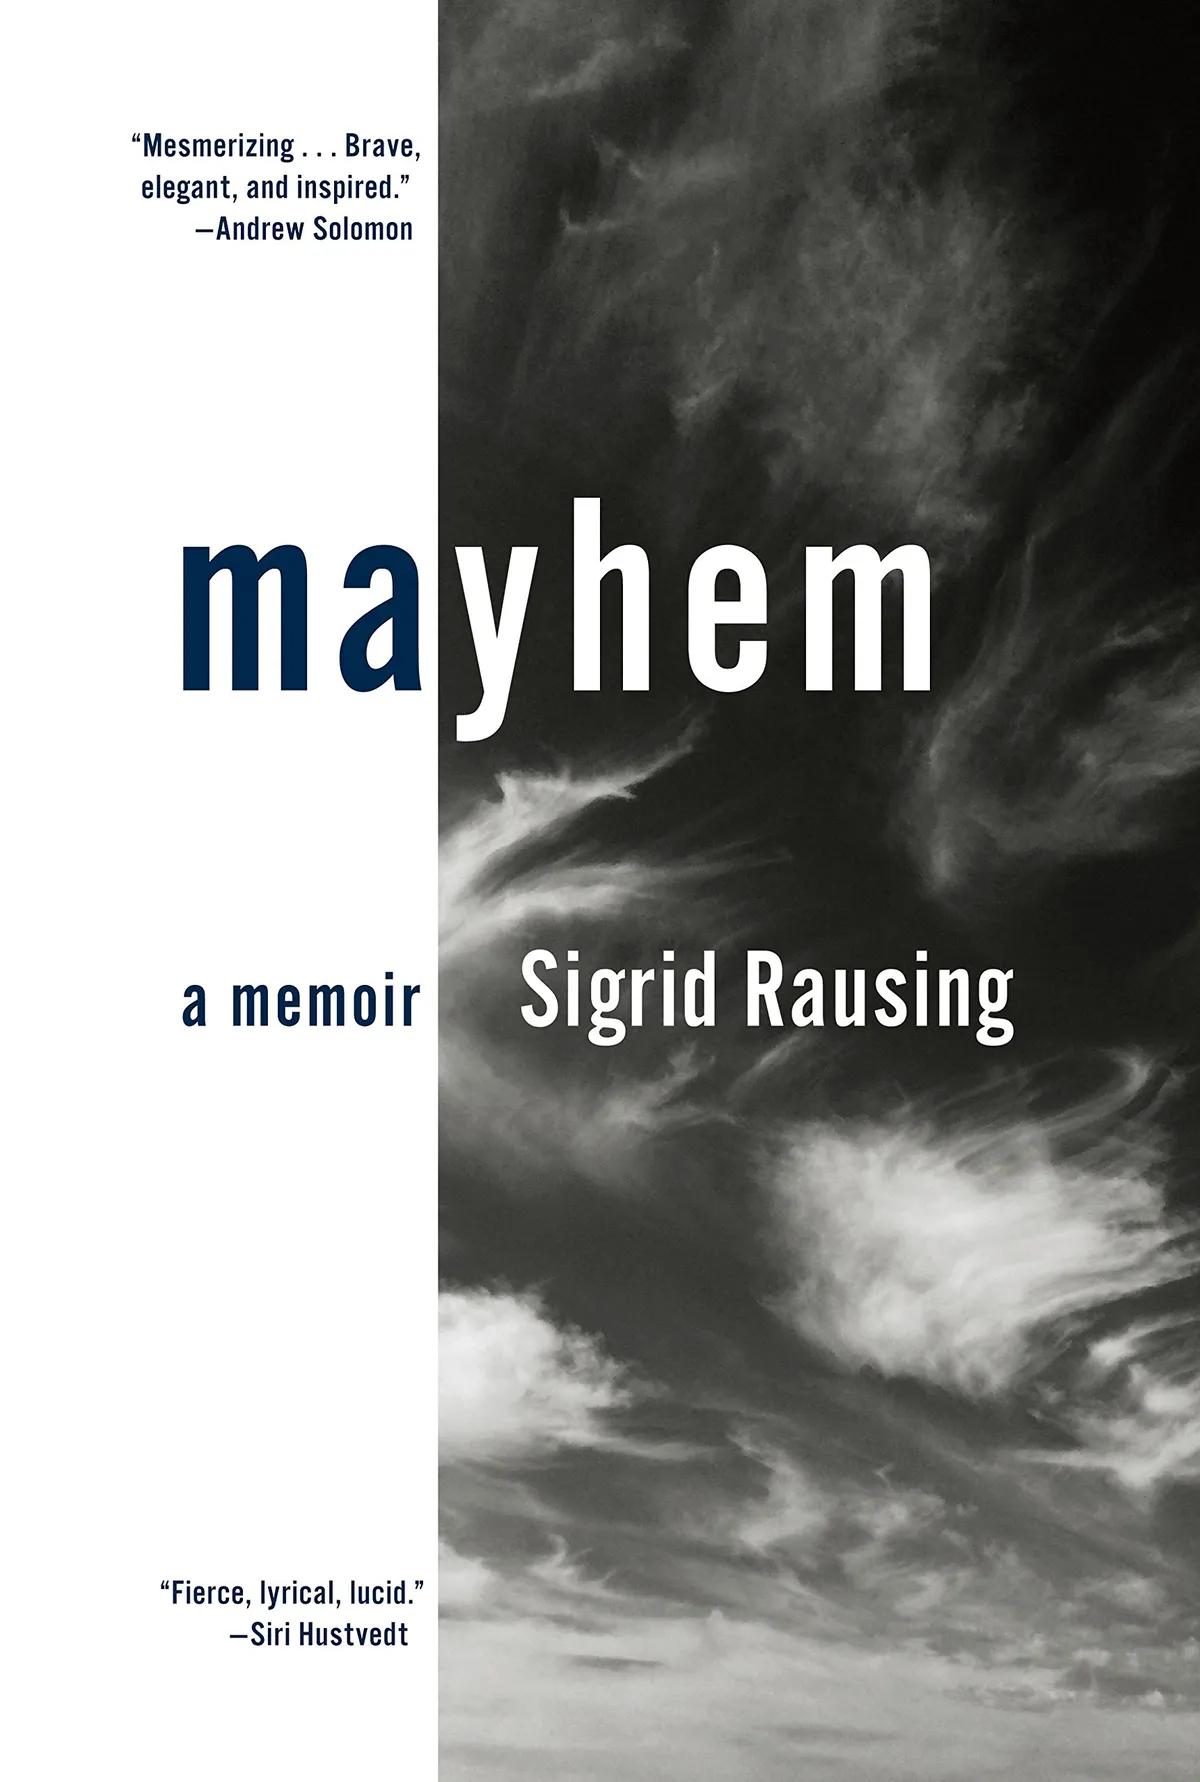 Mayhem: a memoir by Sigrid Rausing is out now (£16.99, Hamish Hamilton)